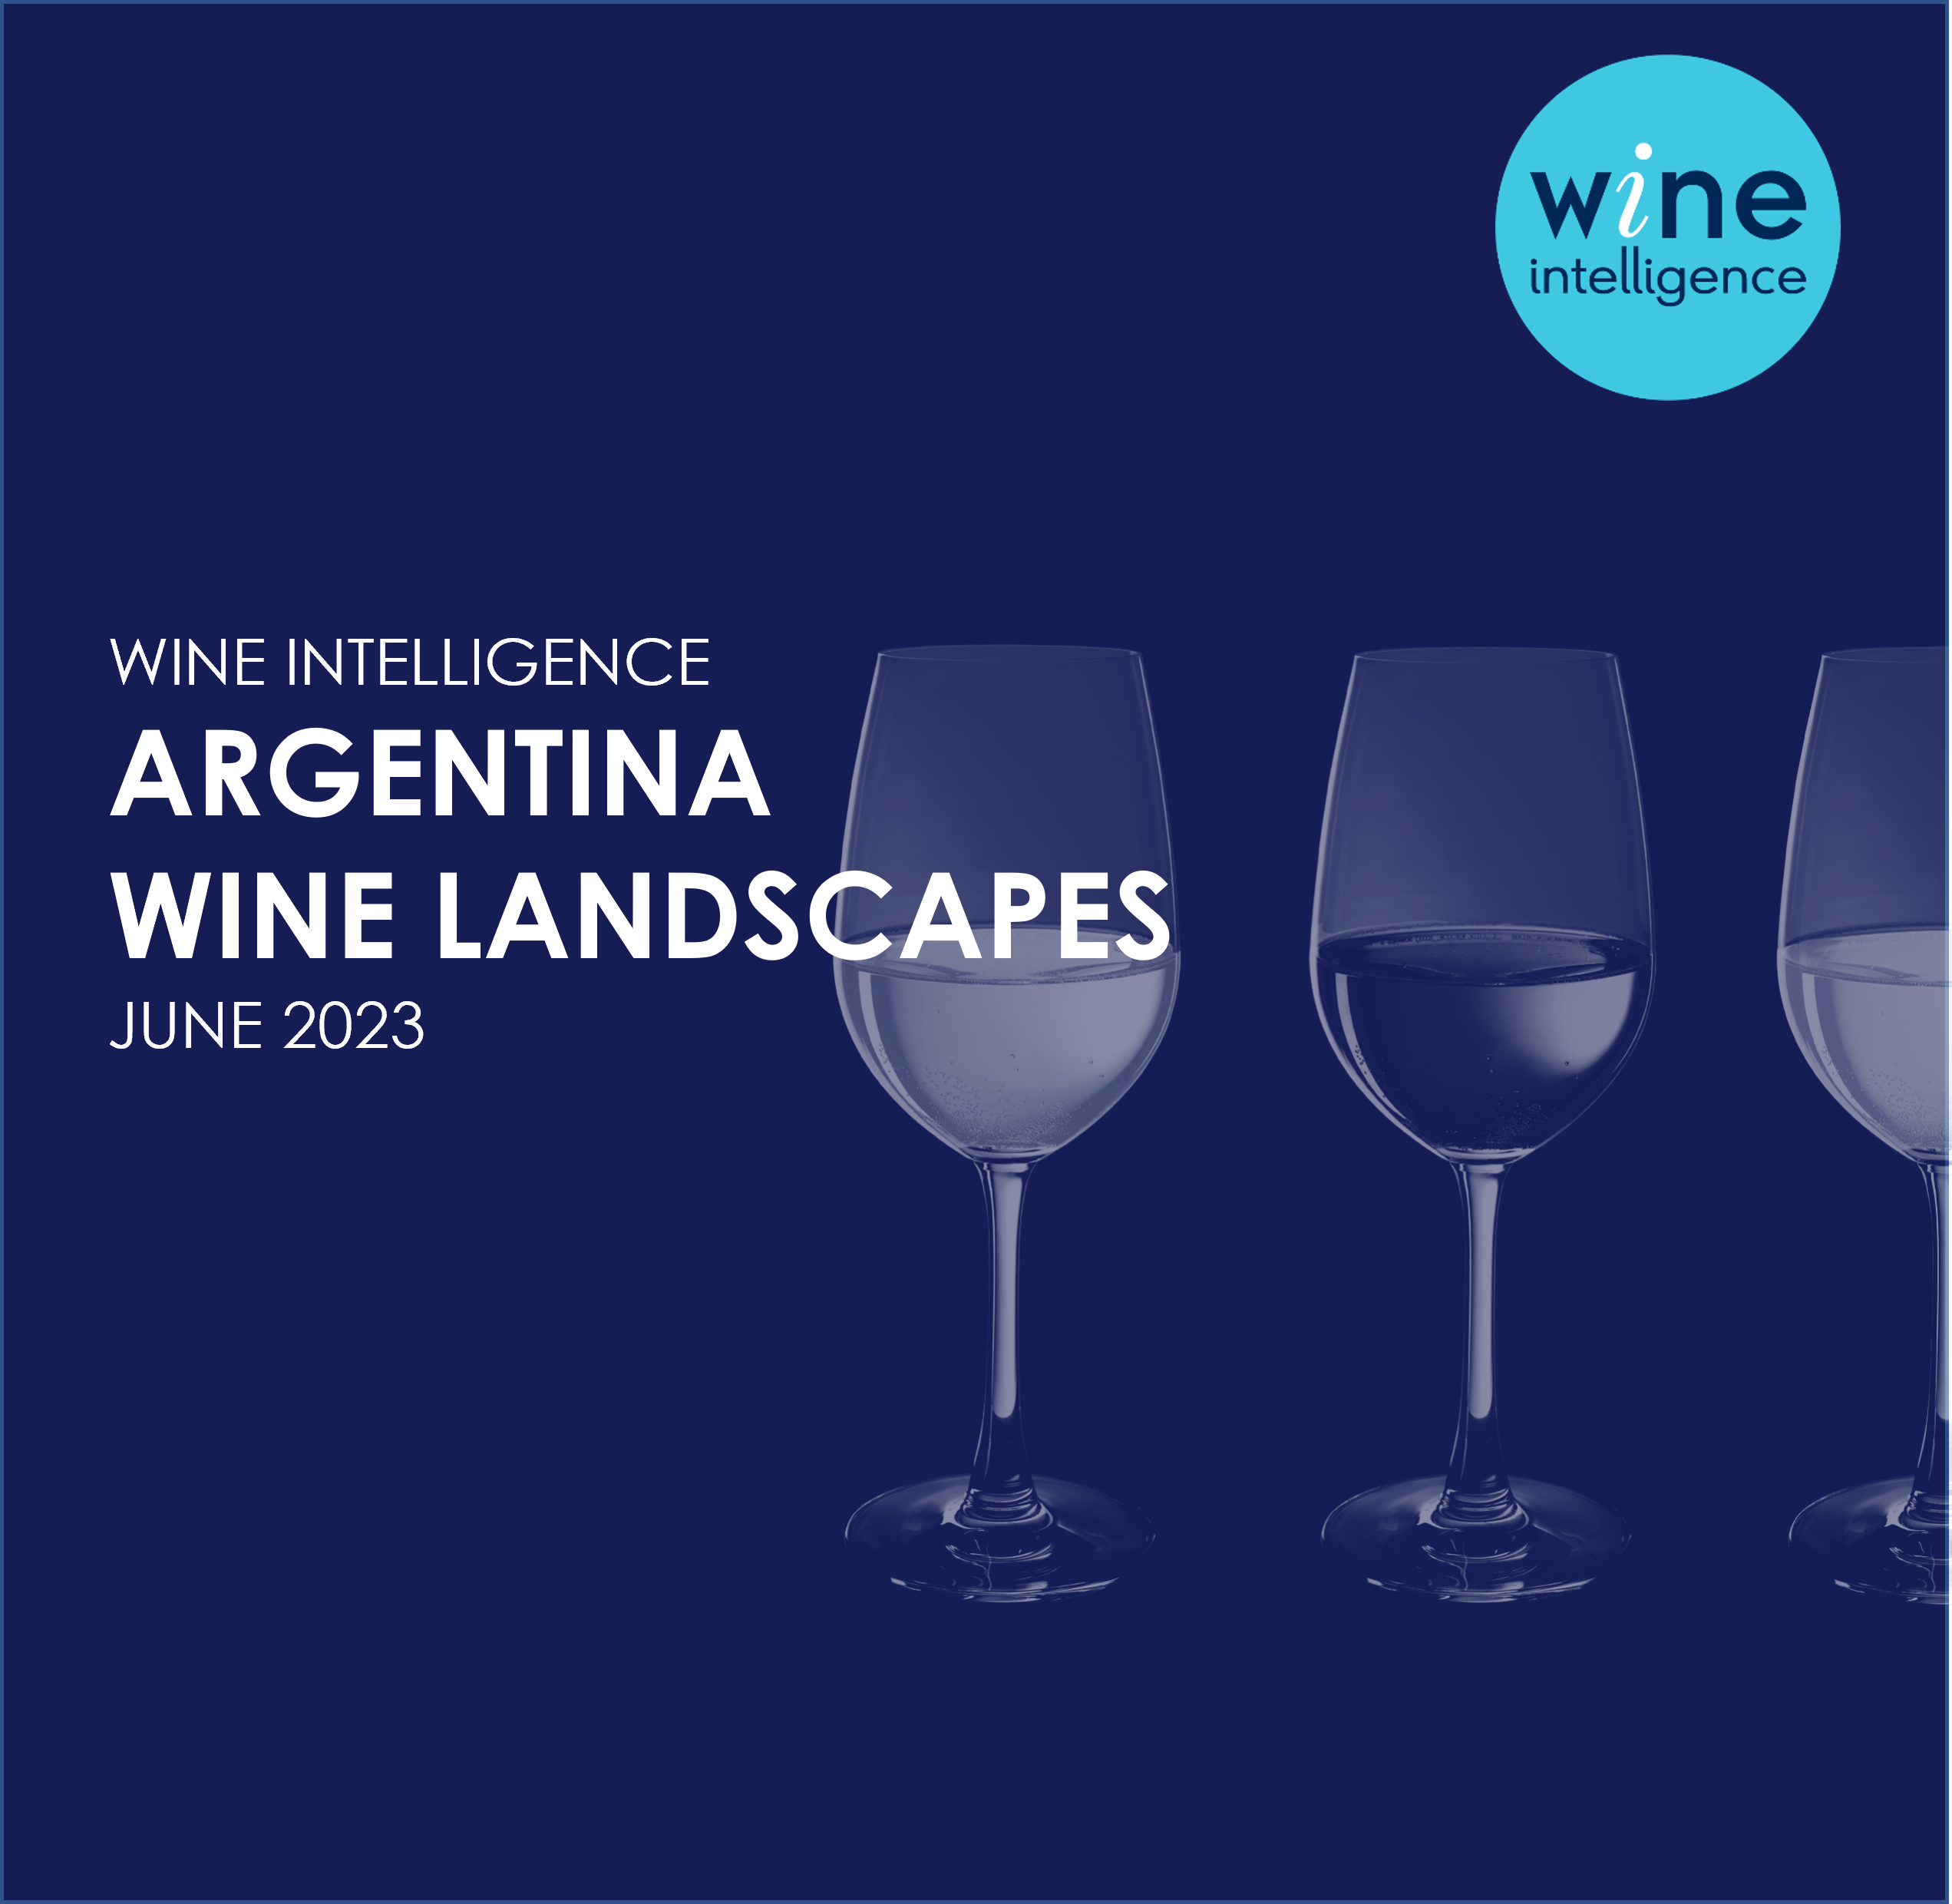 Argentina Wine Landscapes thumbnail 2023 - Argentina Wine Landscapes Report 2023